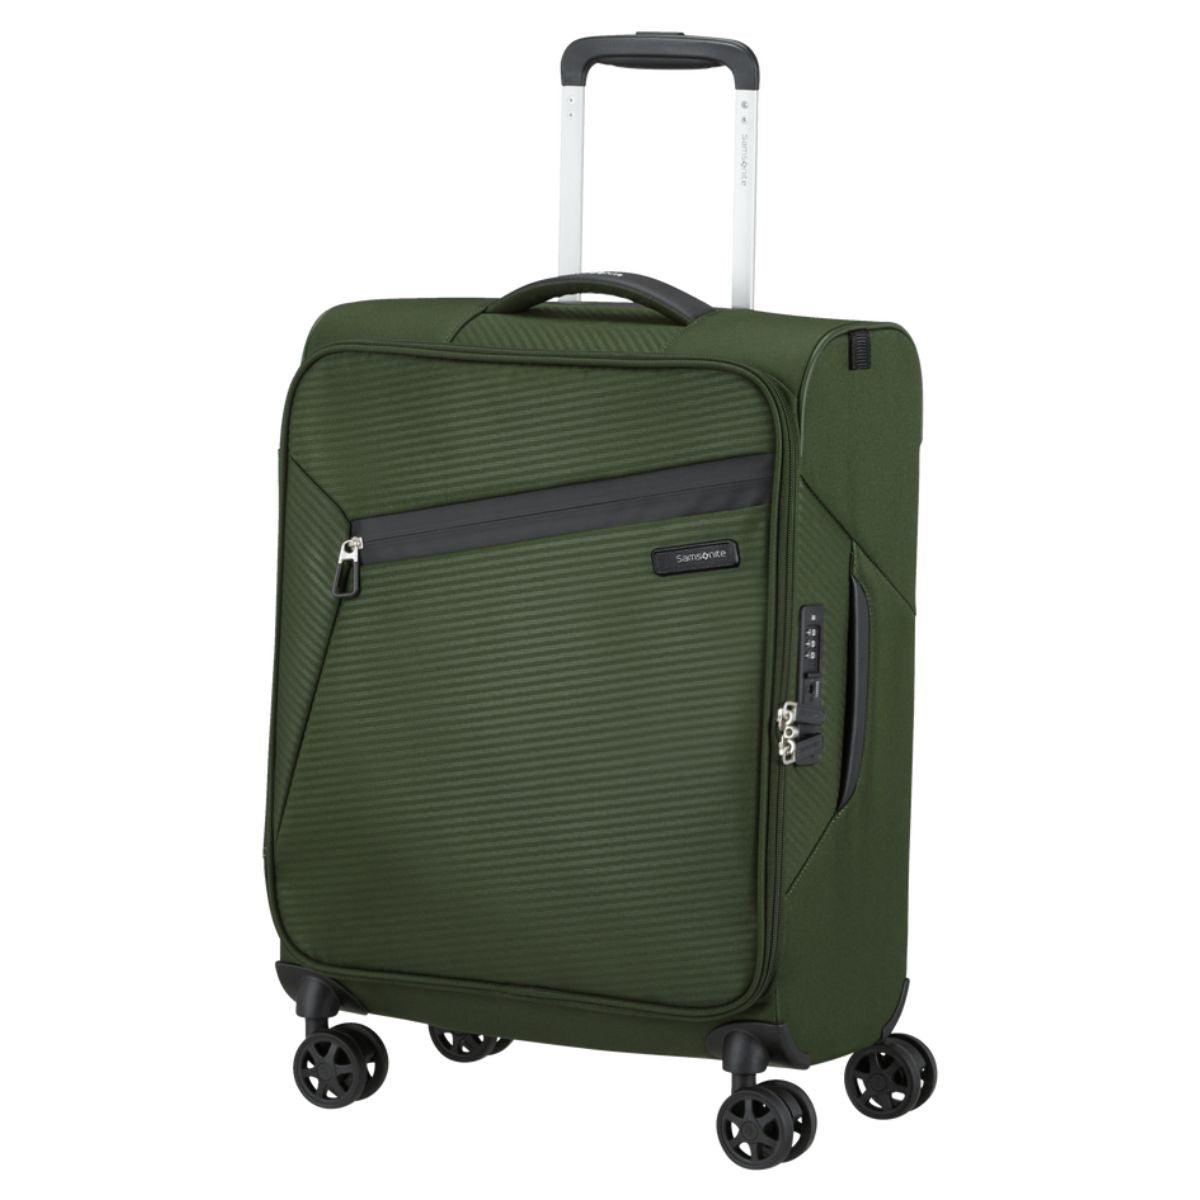 Voorzijde Samsonite Litebeam handbagage donkergroen #kleur_donker-groen